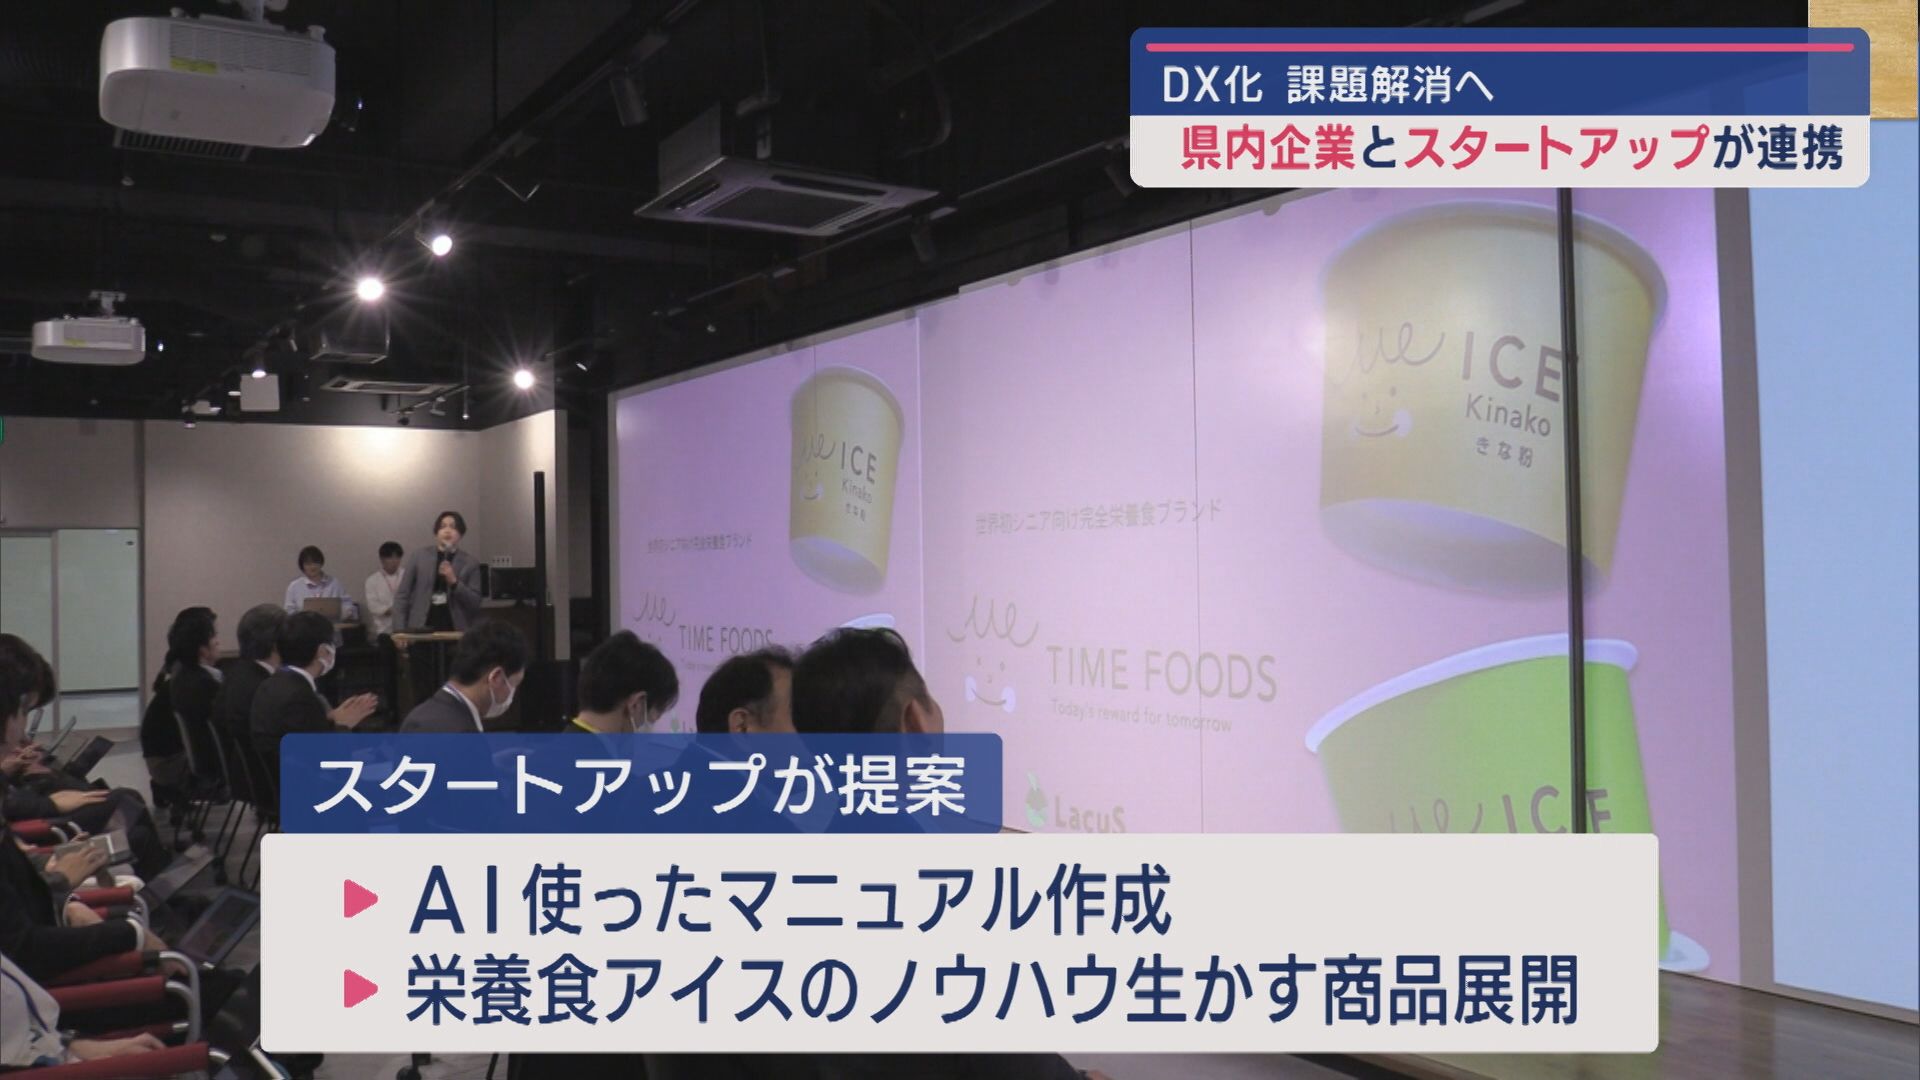 DX化･課題解決 スタートアップの技術で県内企業と協業を【新潟】